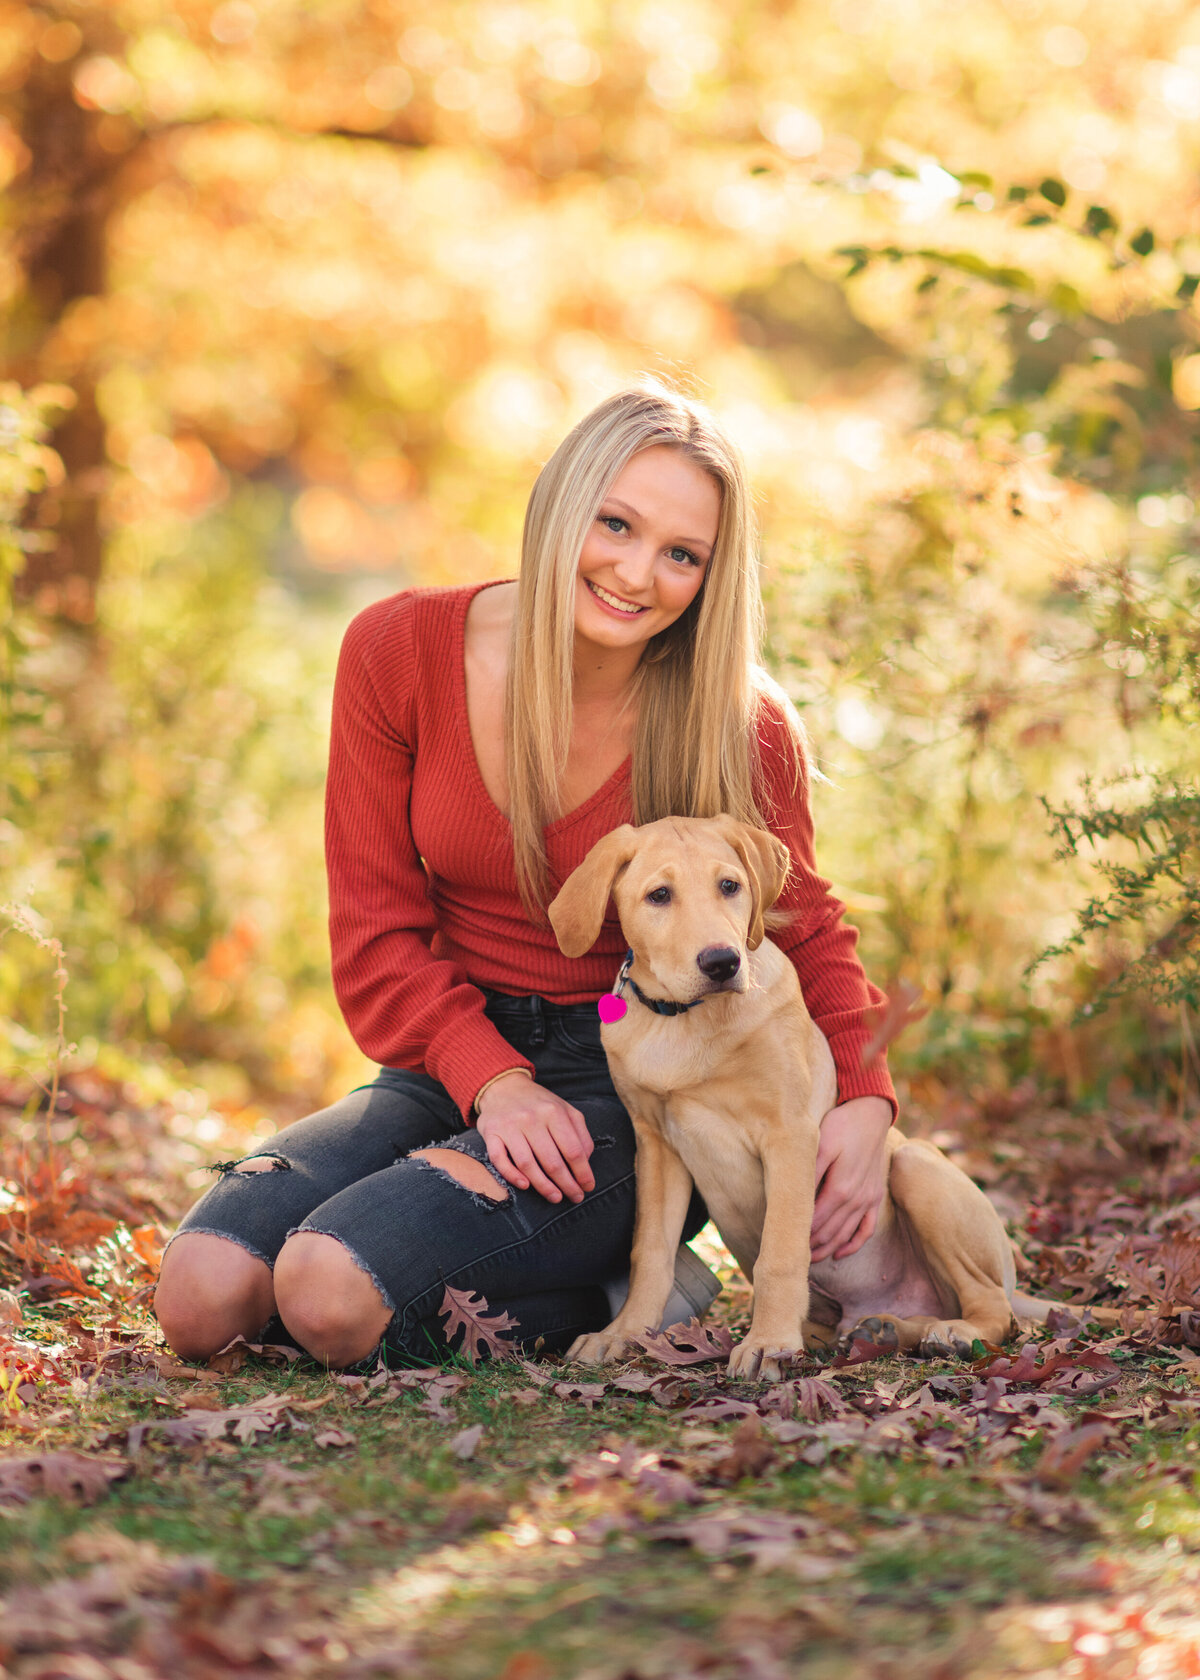 Des-Moines-Iowa-Senior-Photographer-Theresa-Schumacher-Photography-Nature-Fall-Puppy